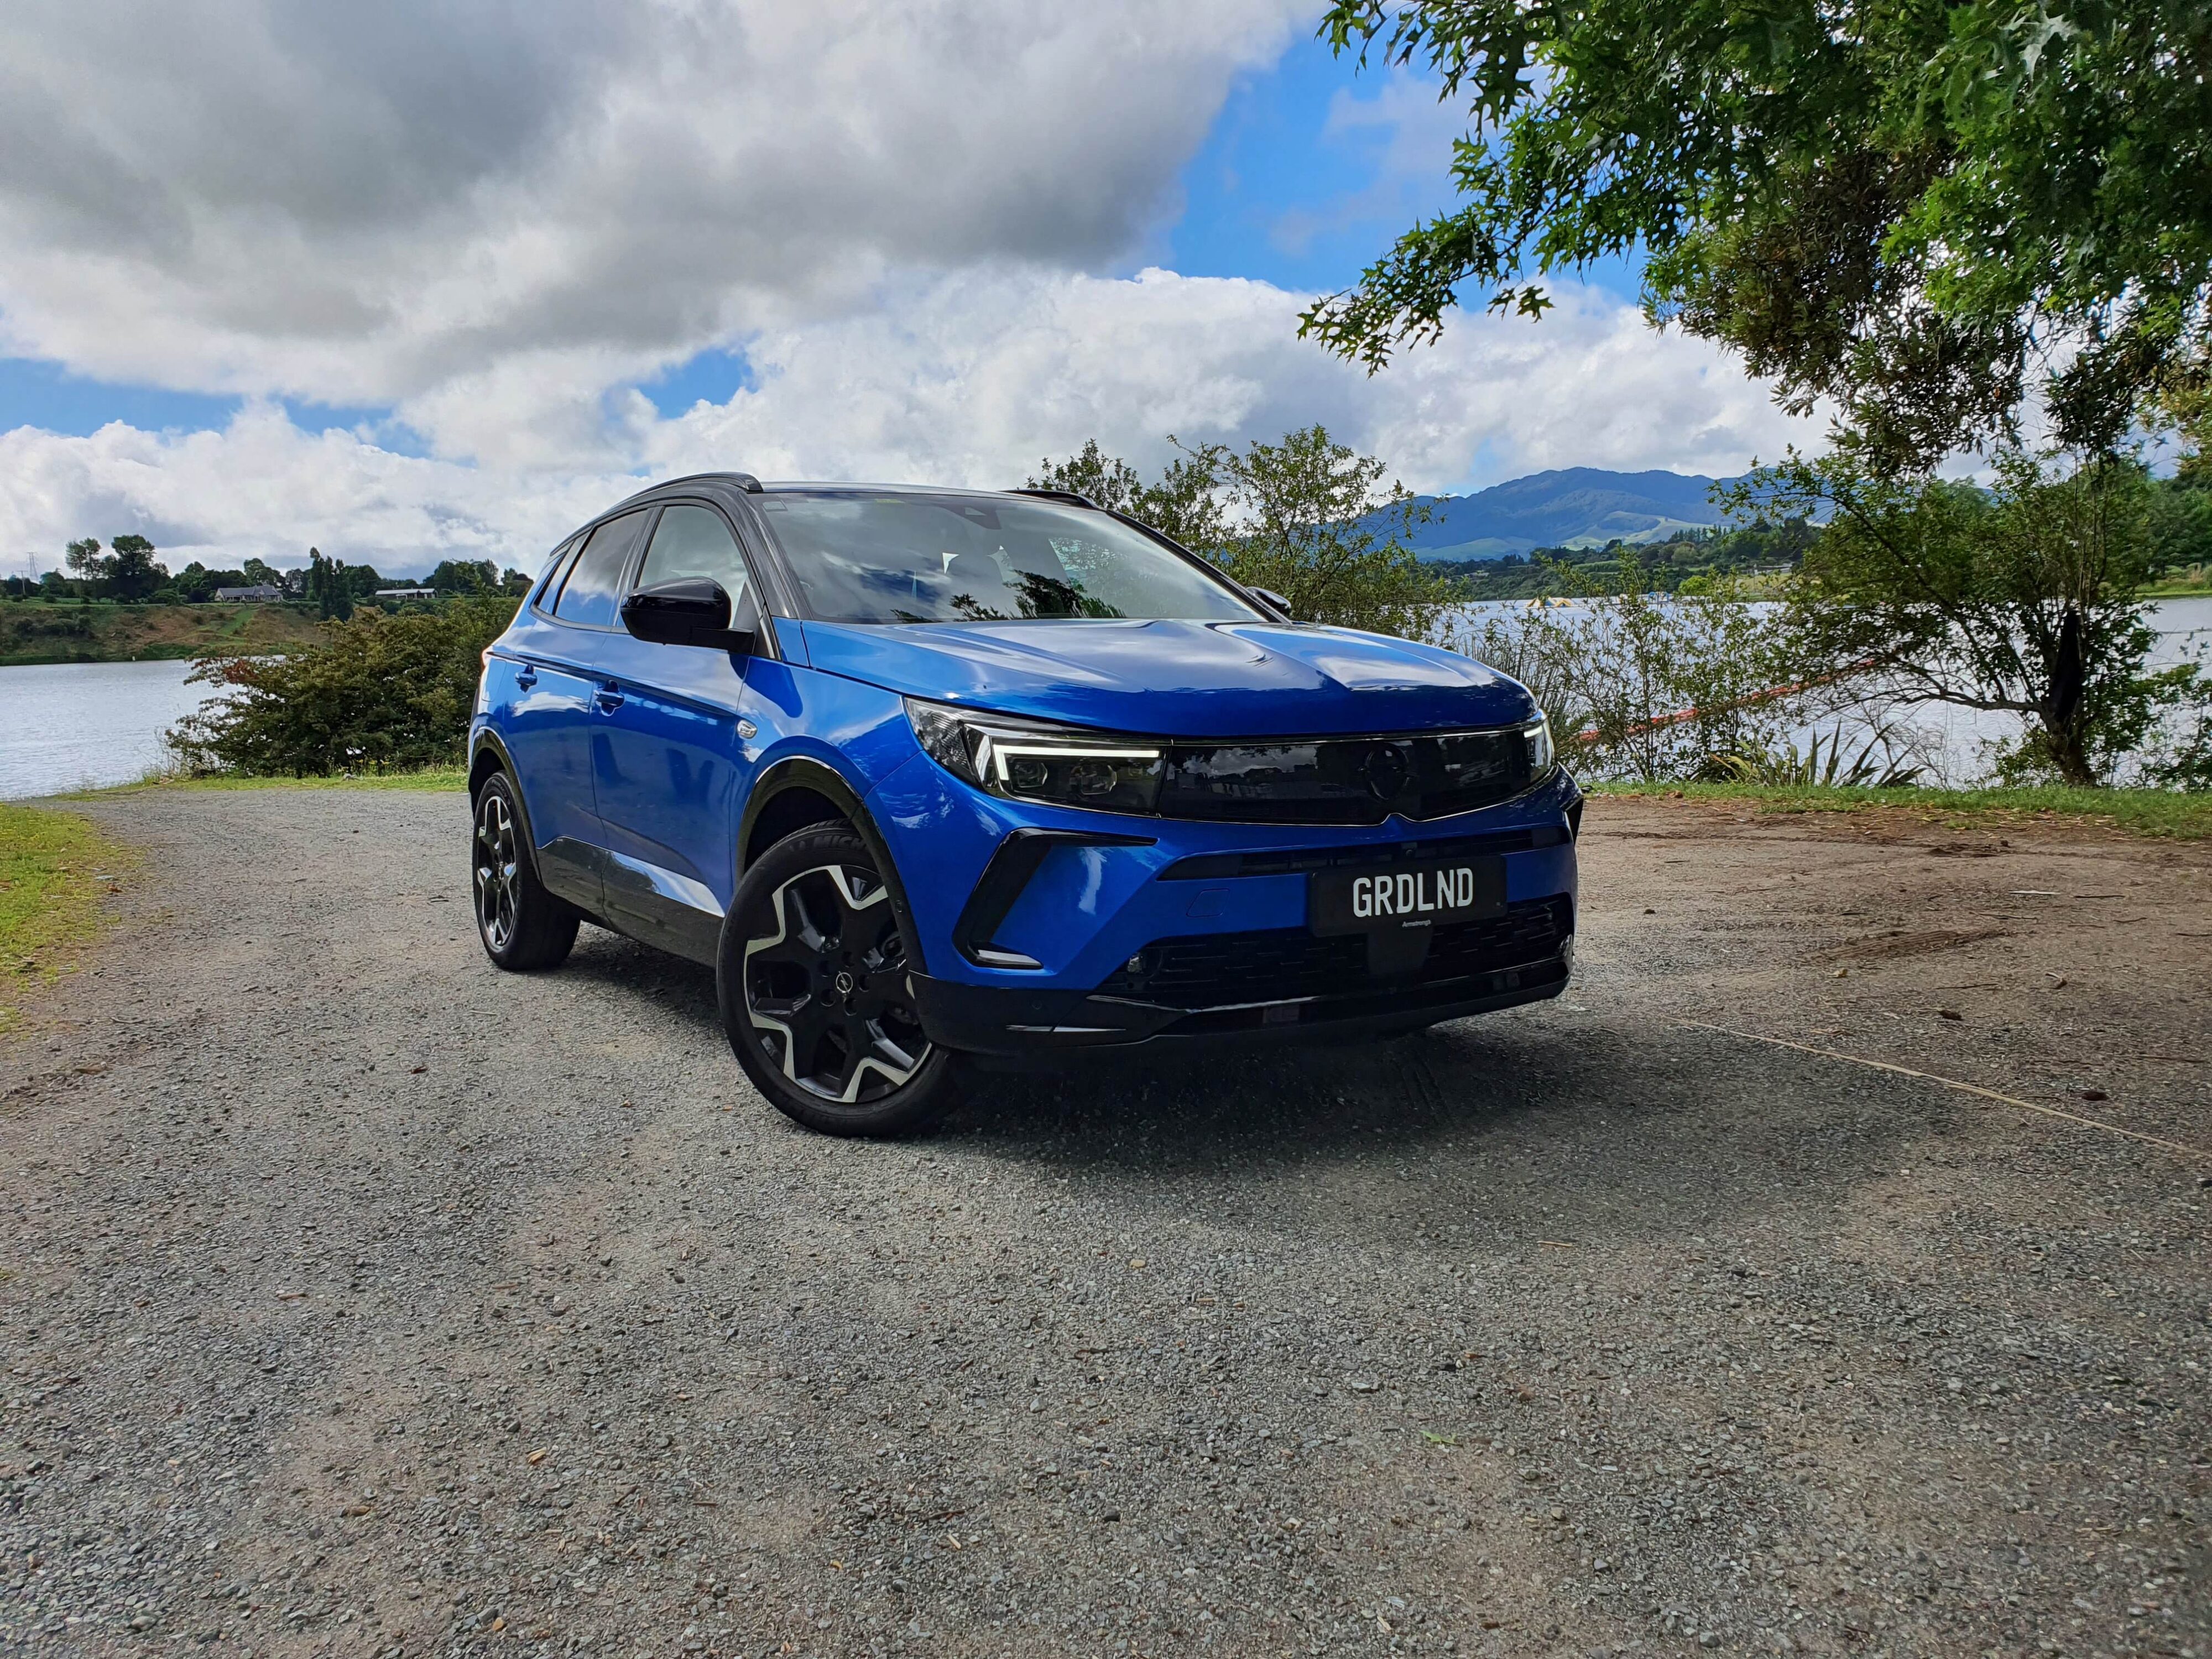 Front three quarters view of a Cobalt Blue Opel Grandland SRi on the banks of Lake Karapiro, Waikato, New Zealand.